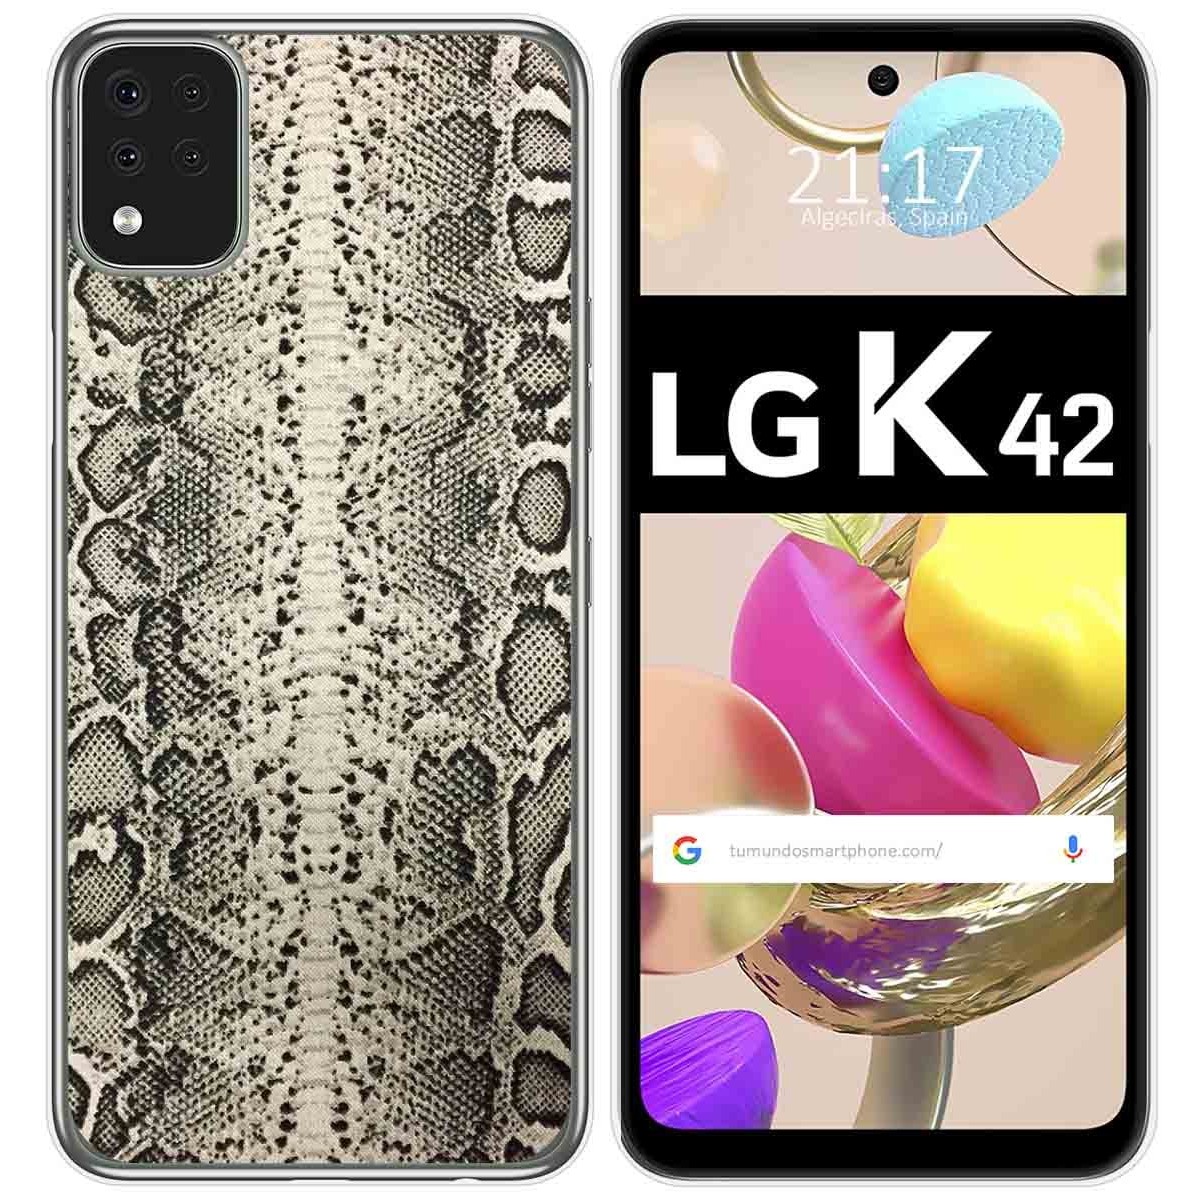 LG K42 Funda Gel Tpu Silicona dibujo 01|Envio Gratis